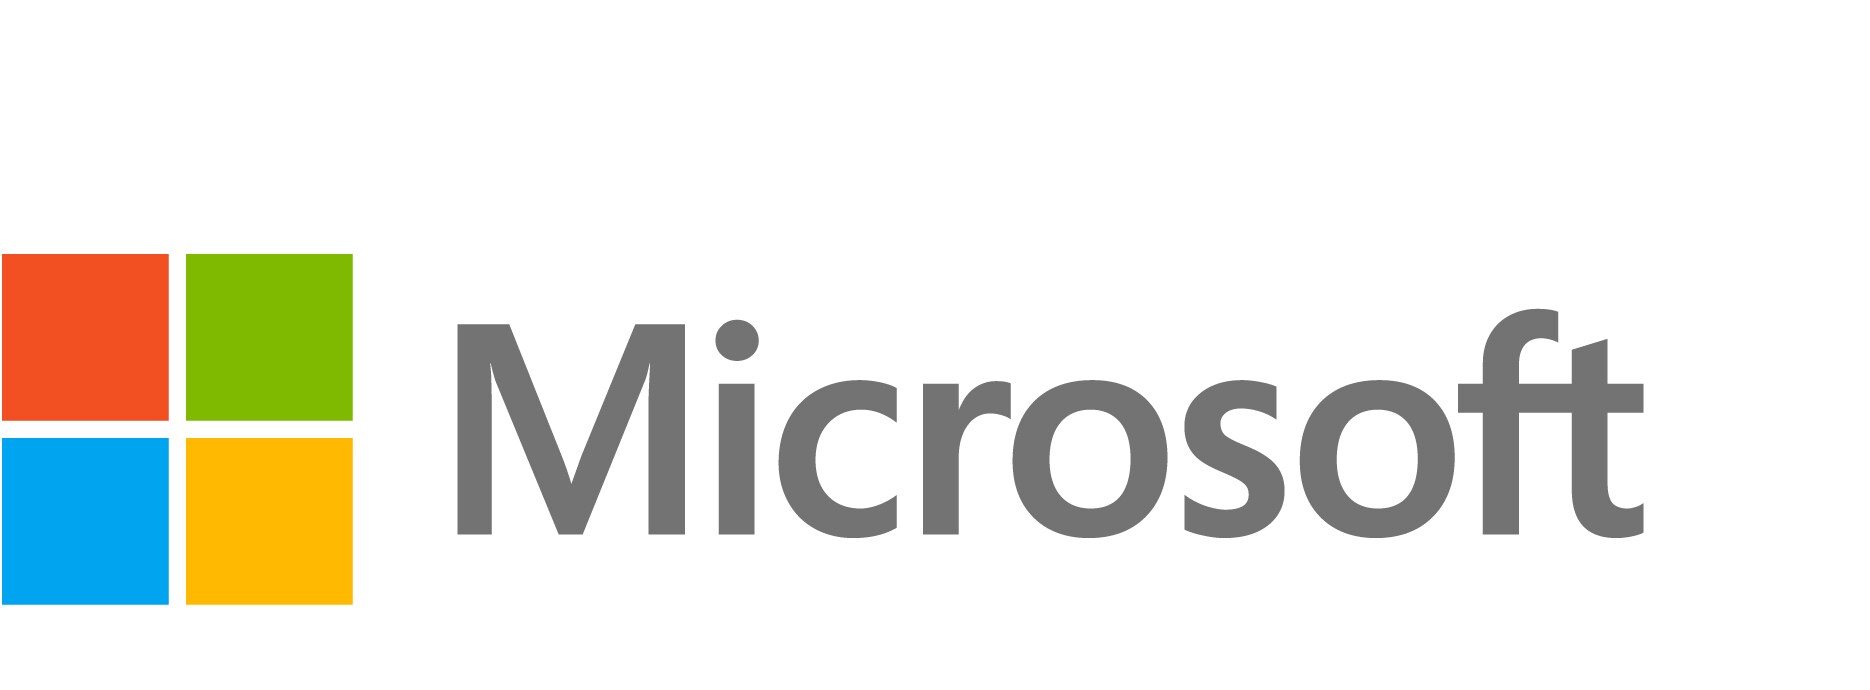 Microsoft Bing Maps Asset Management Platform Services - subscription license (1 month) - 1 license